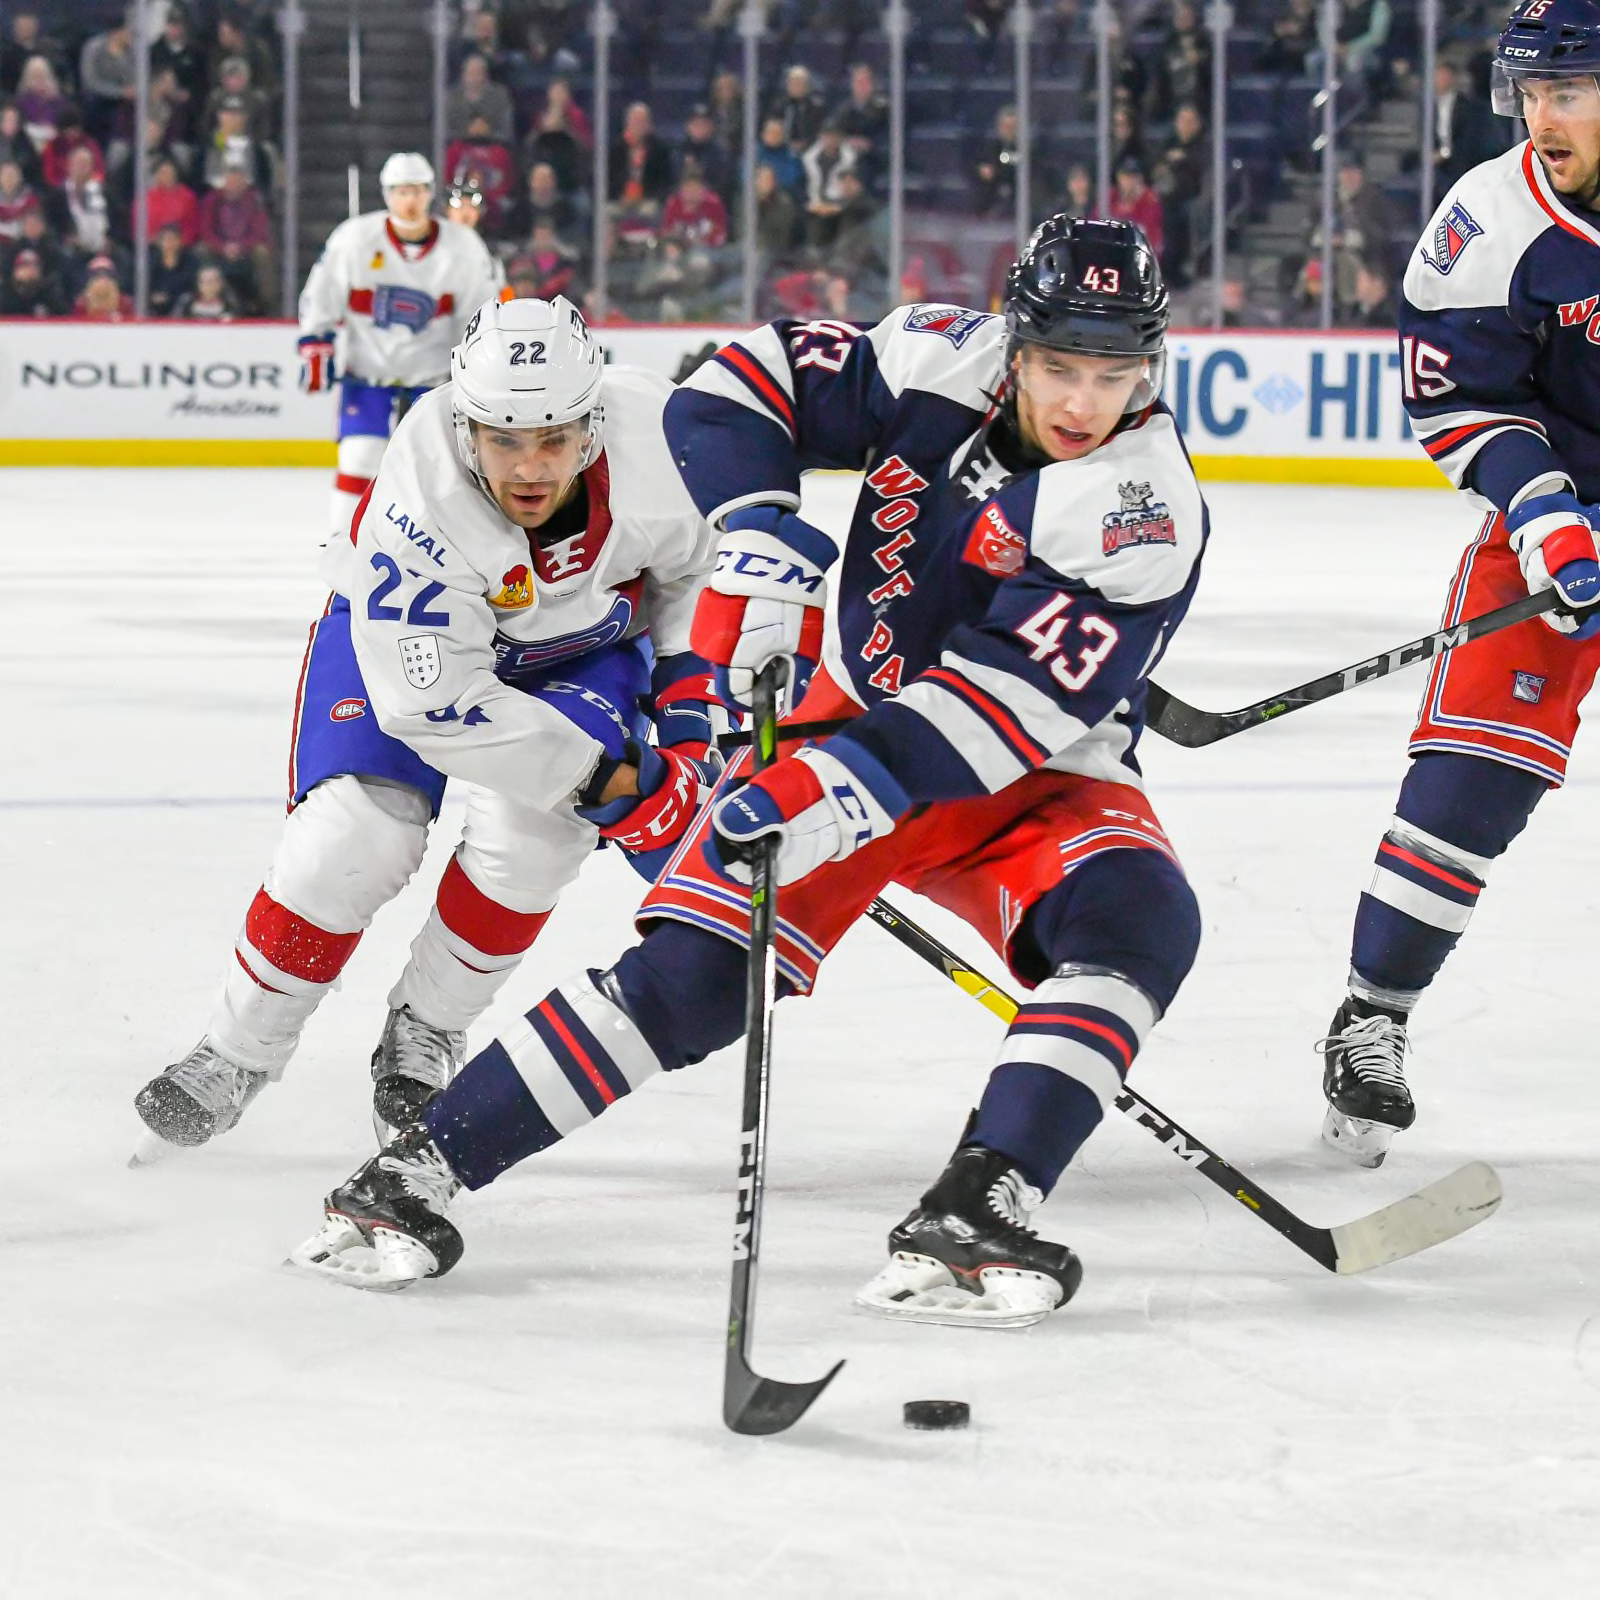 New York Rangers' Libor Hajek plays during an NHL hockey game